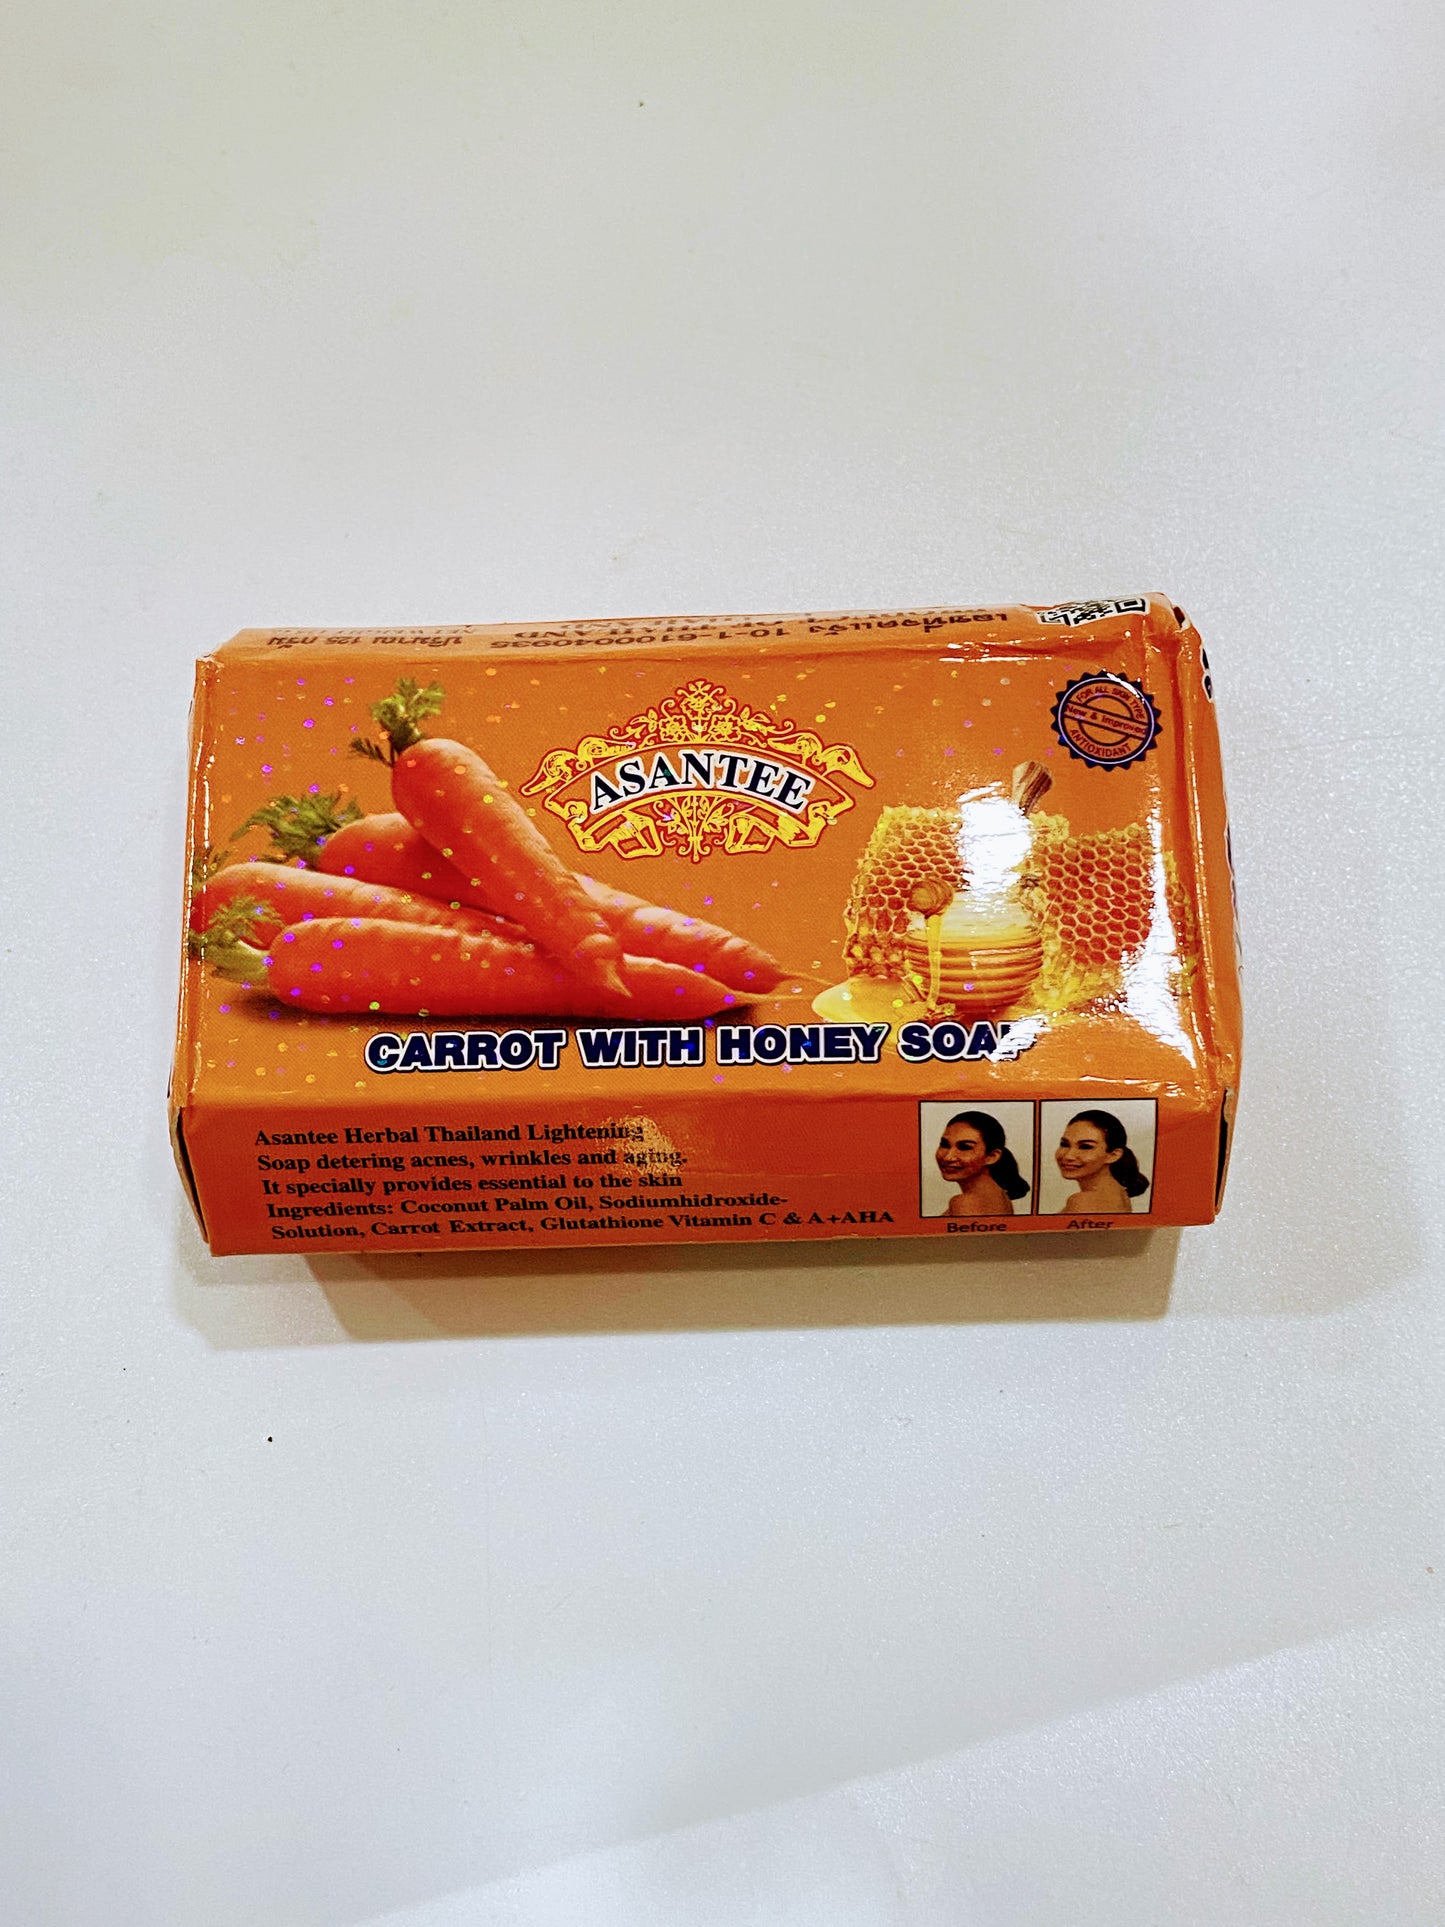 Asantee Soap - Carrot with Honey